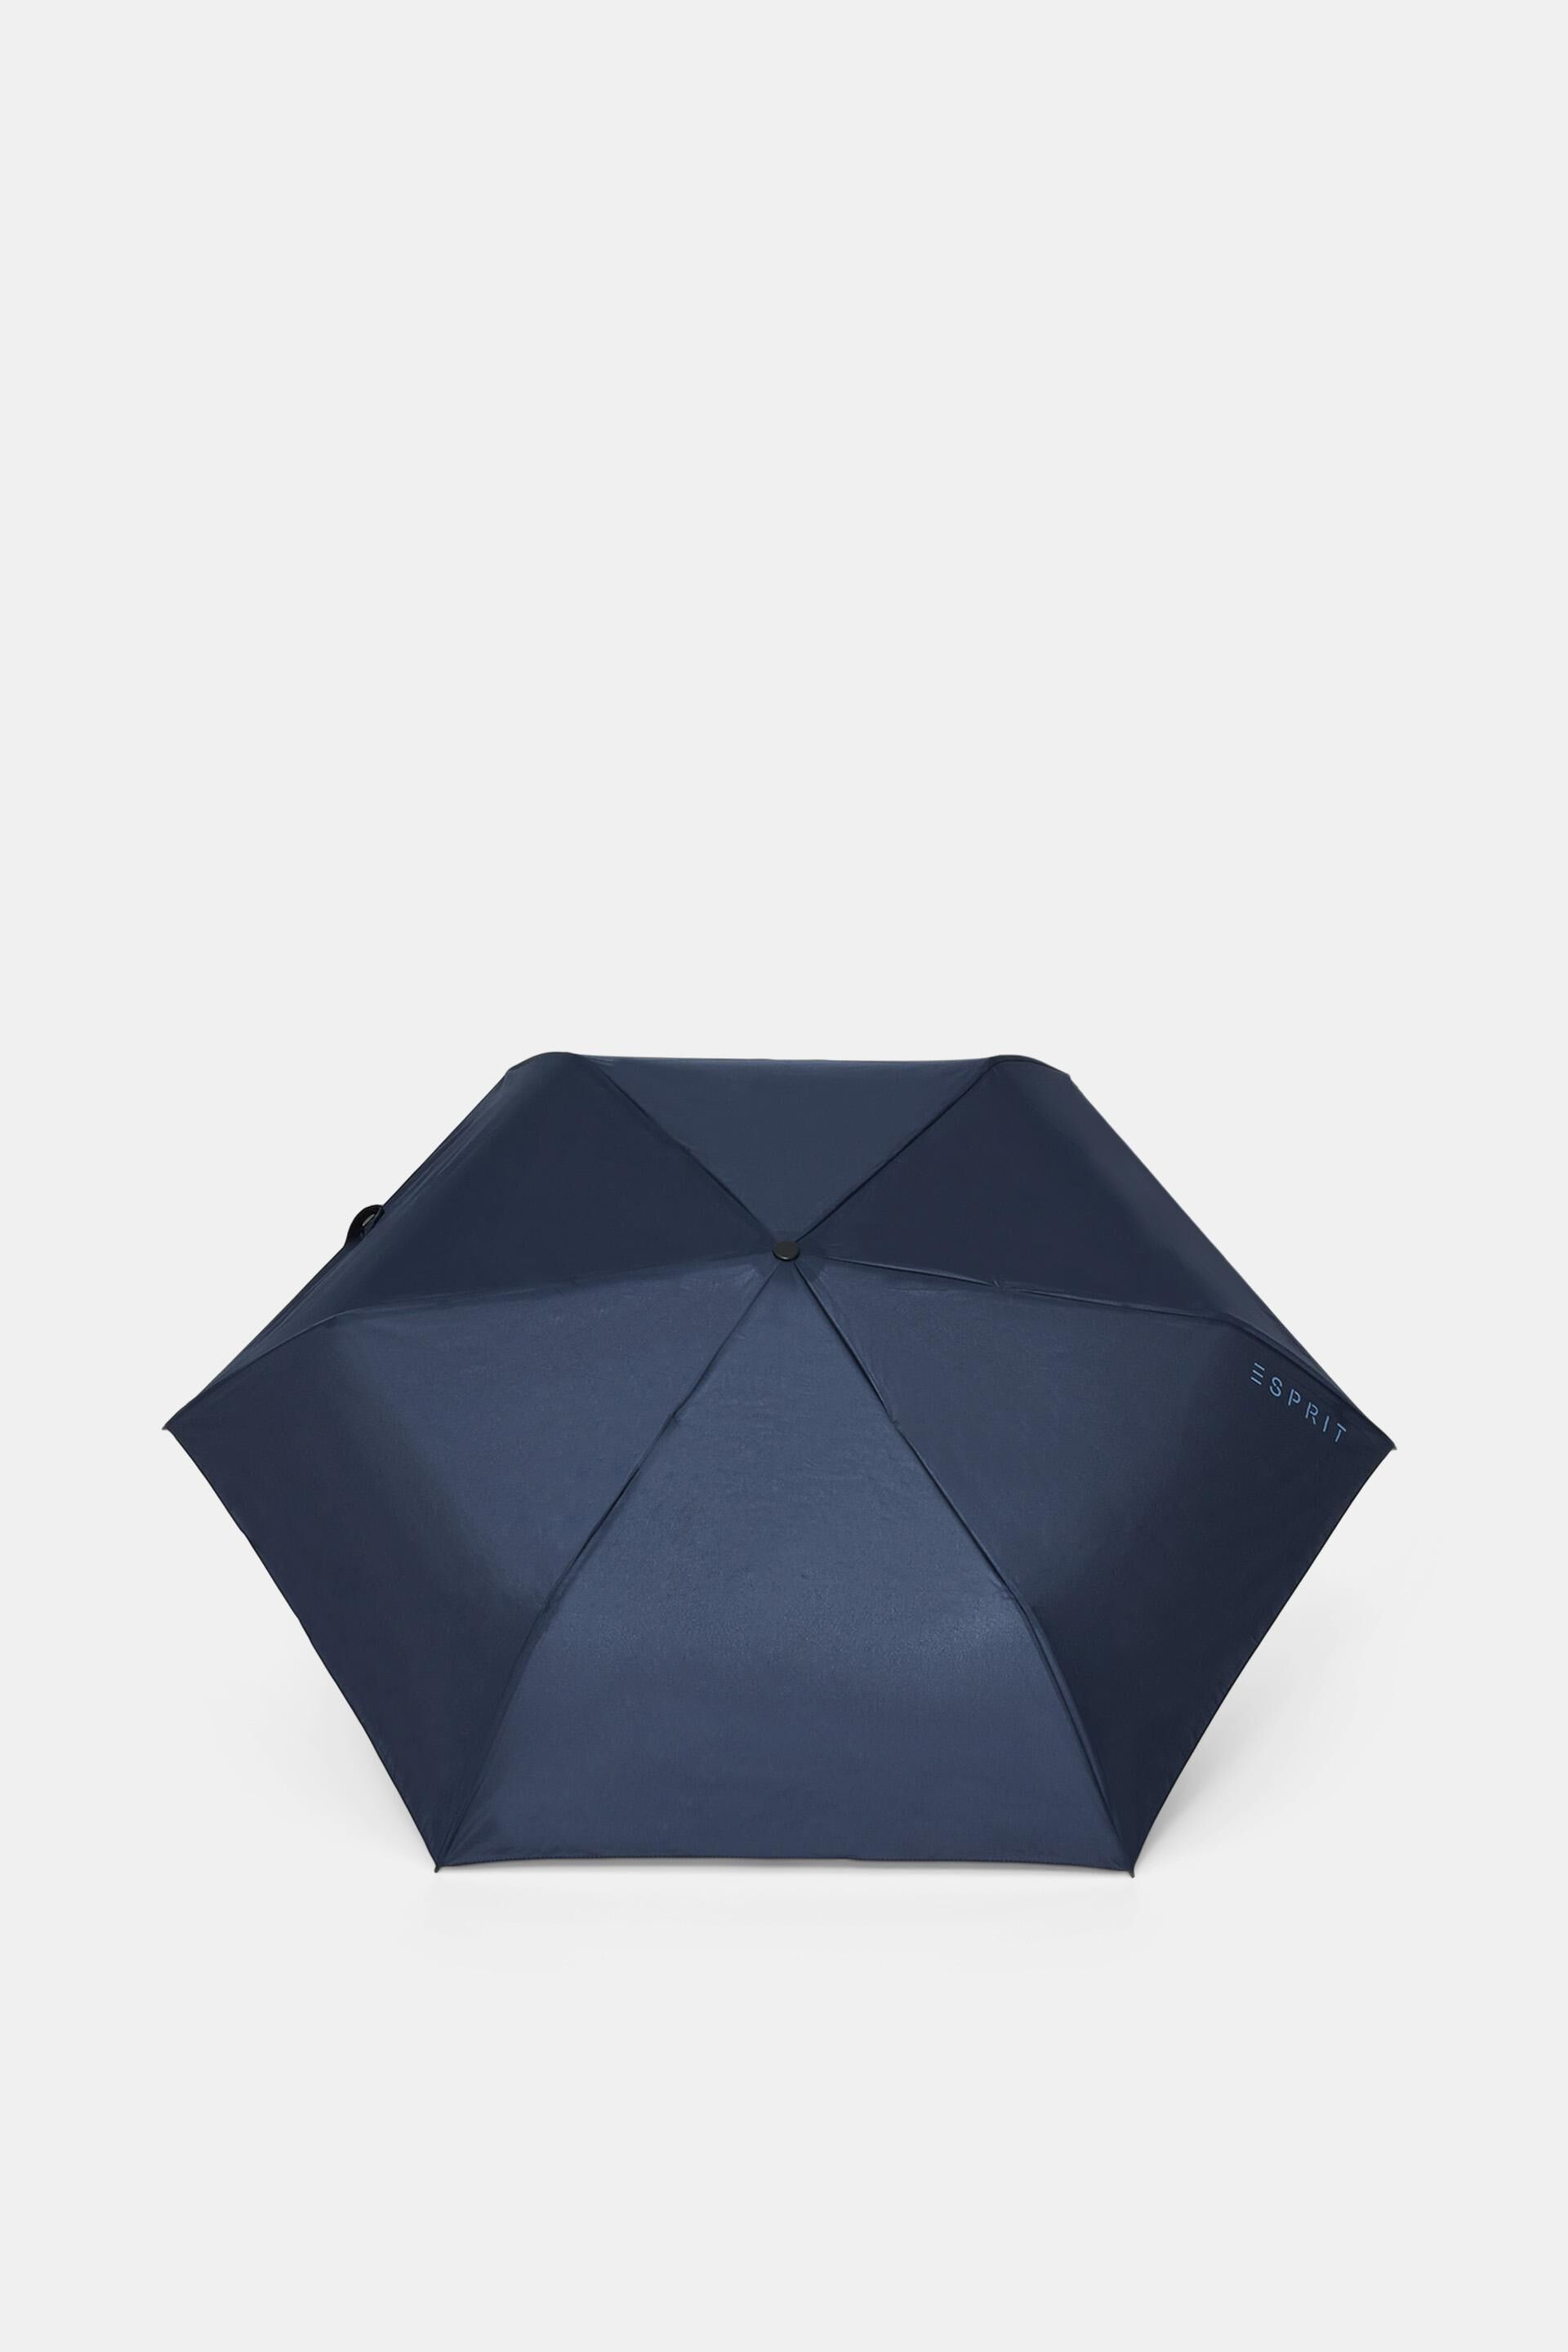 Esprit pocket umbrella slimline Easymatic in blue